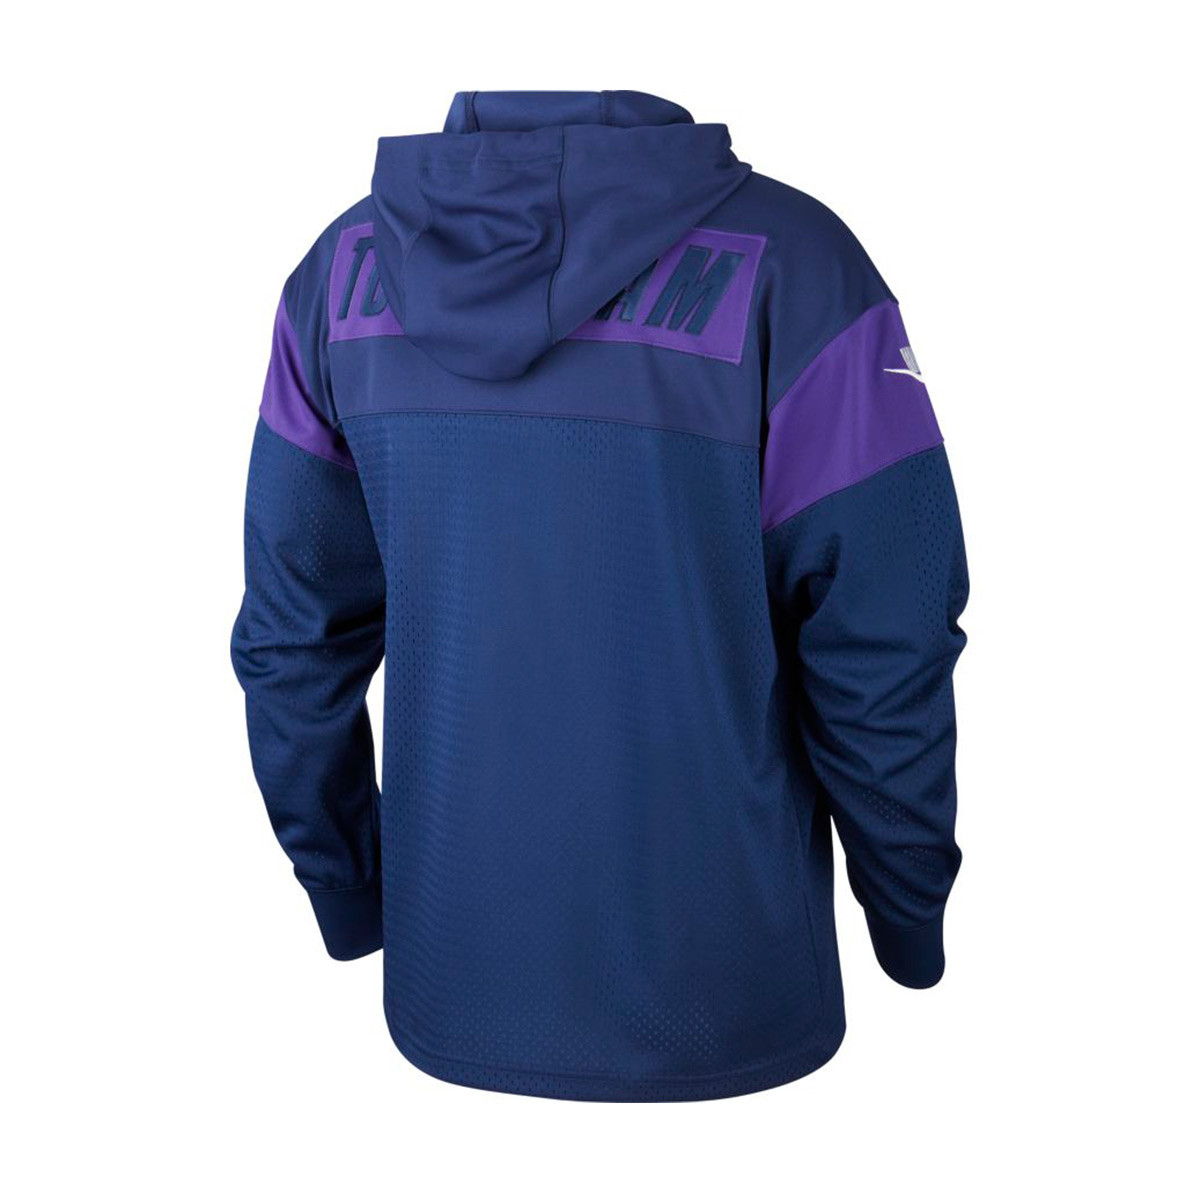 nike court purple hoodie